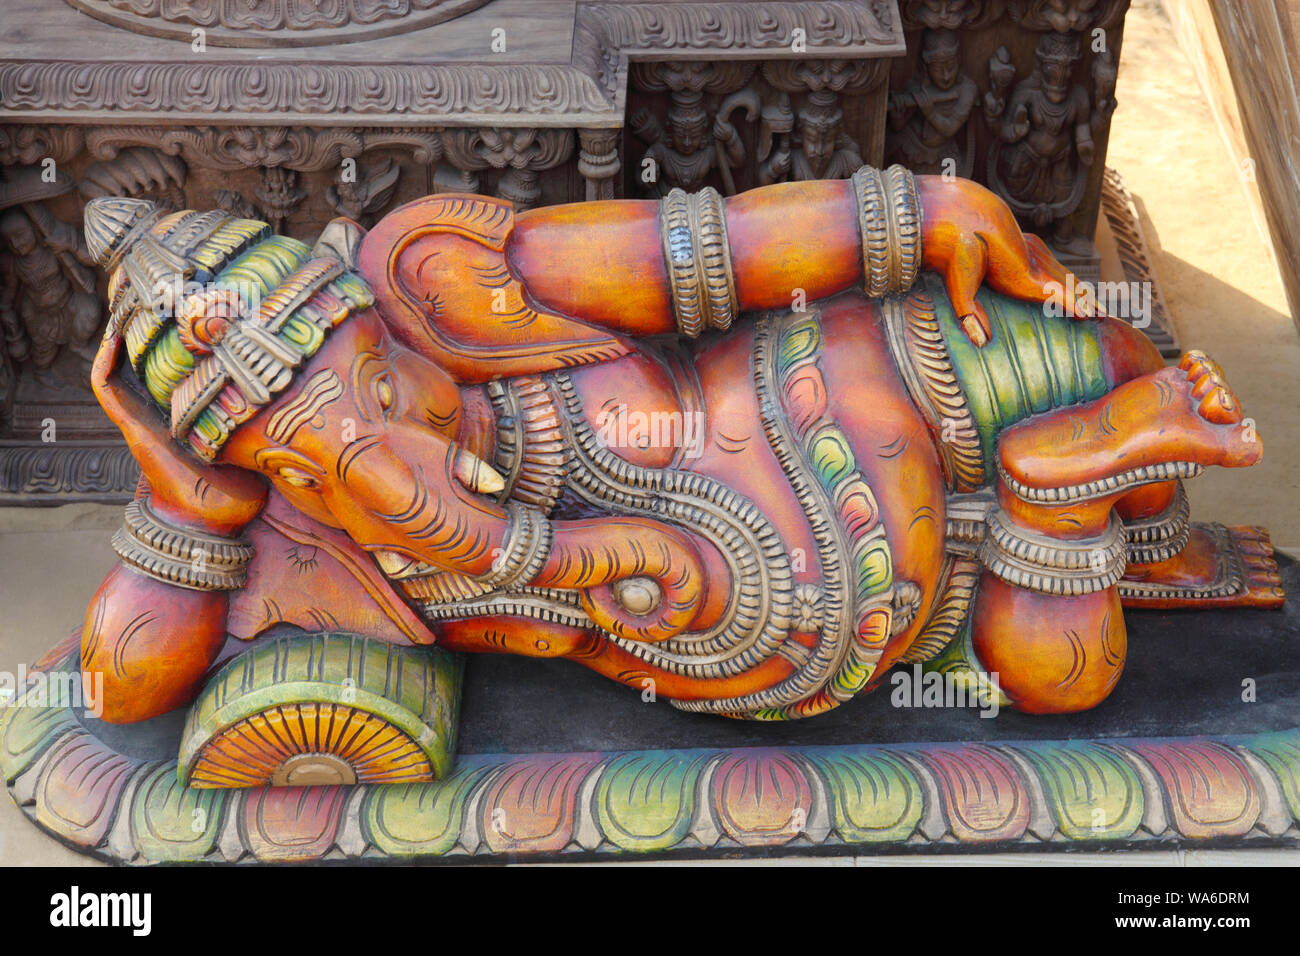 Idol of Lord Ganesha Stock Photo